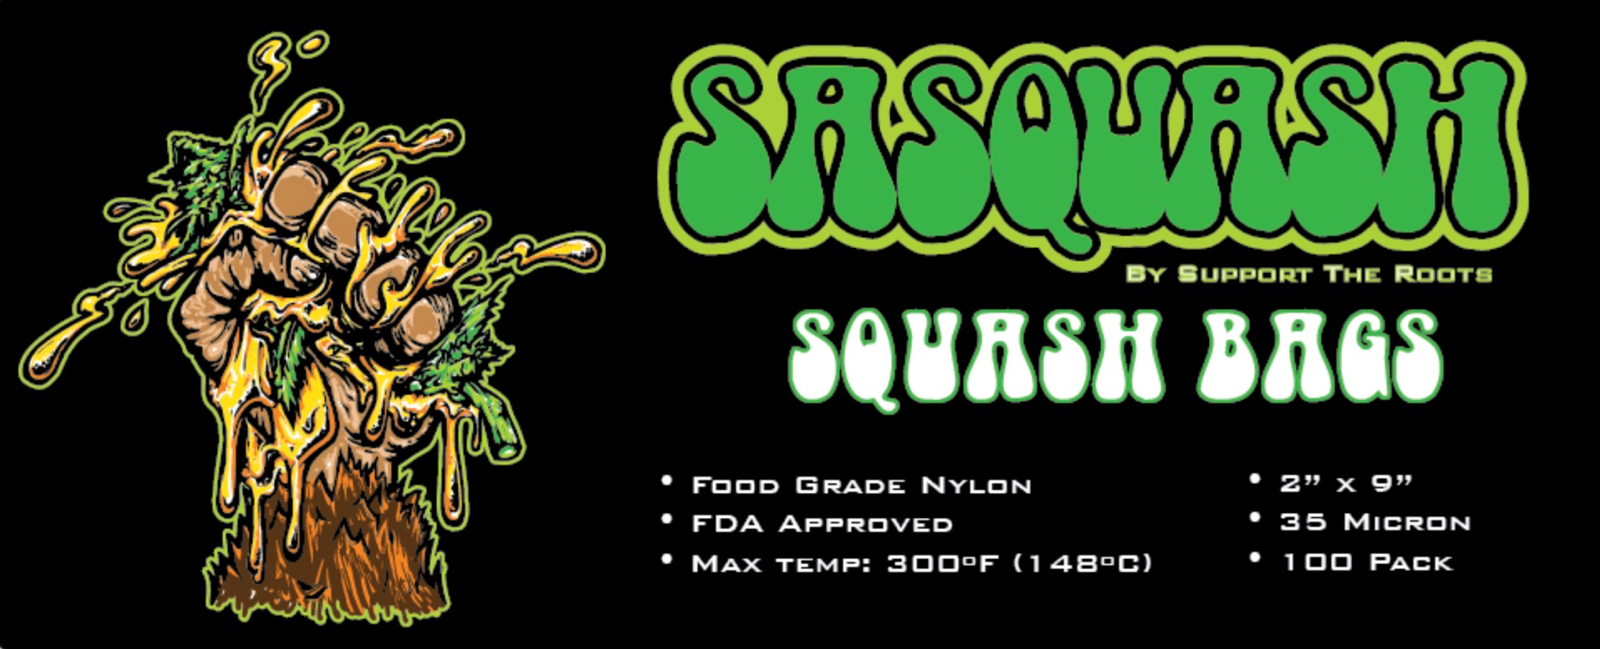 Sasquash 2” x 9” Squash Rosin Bags